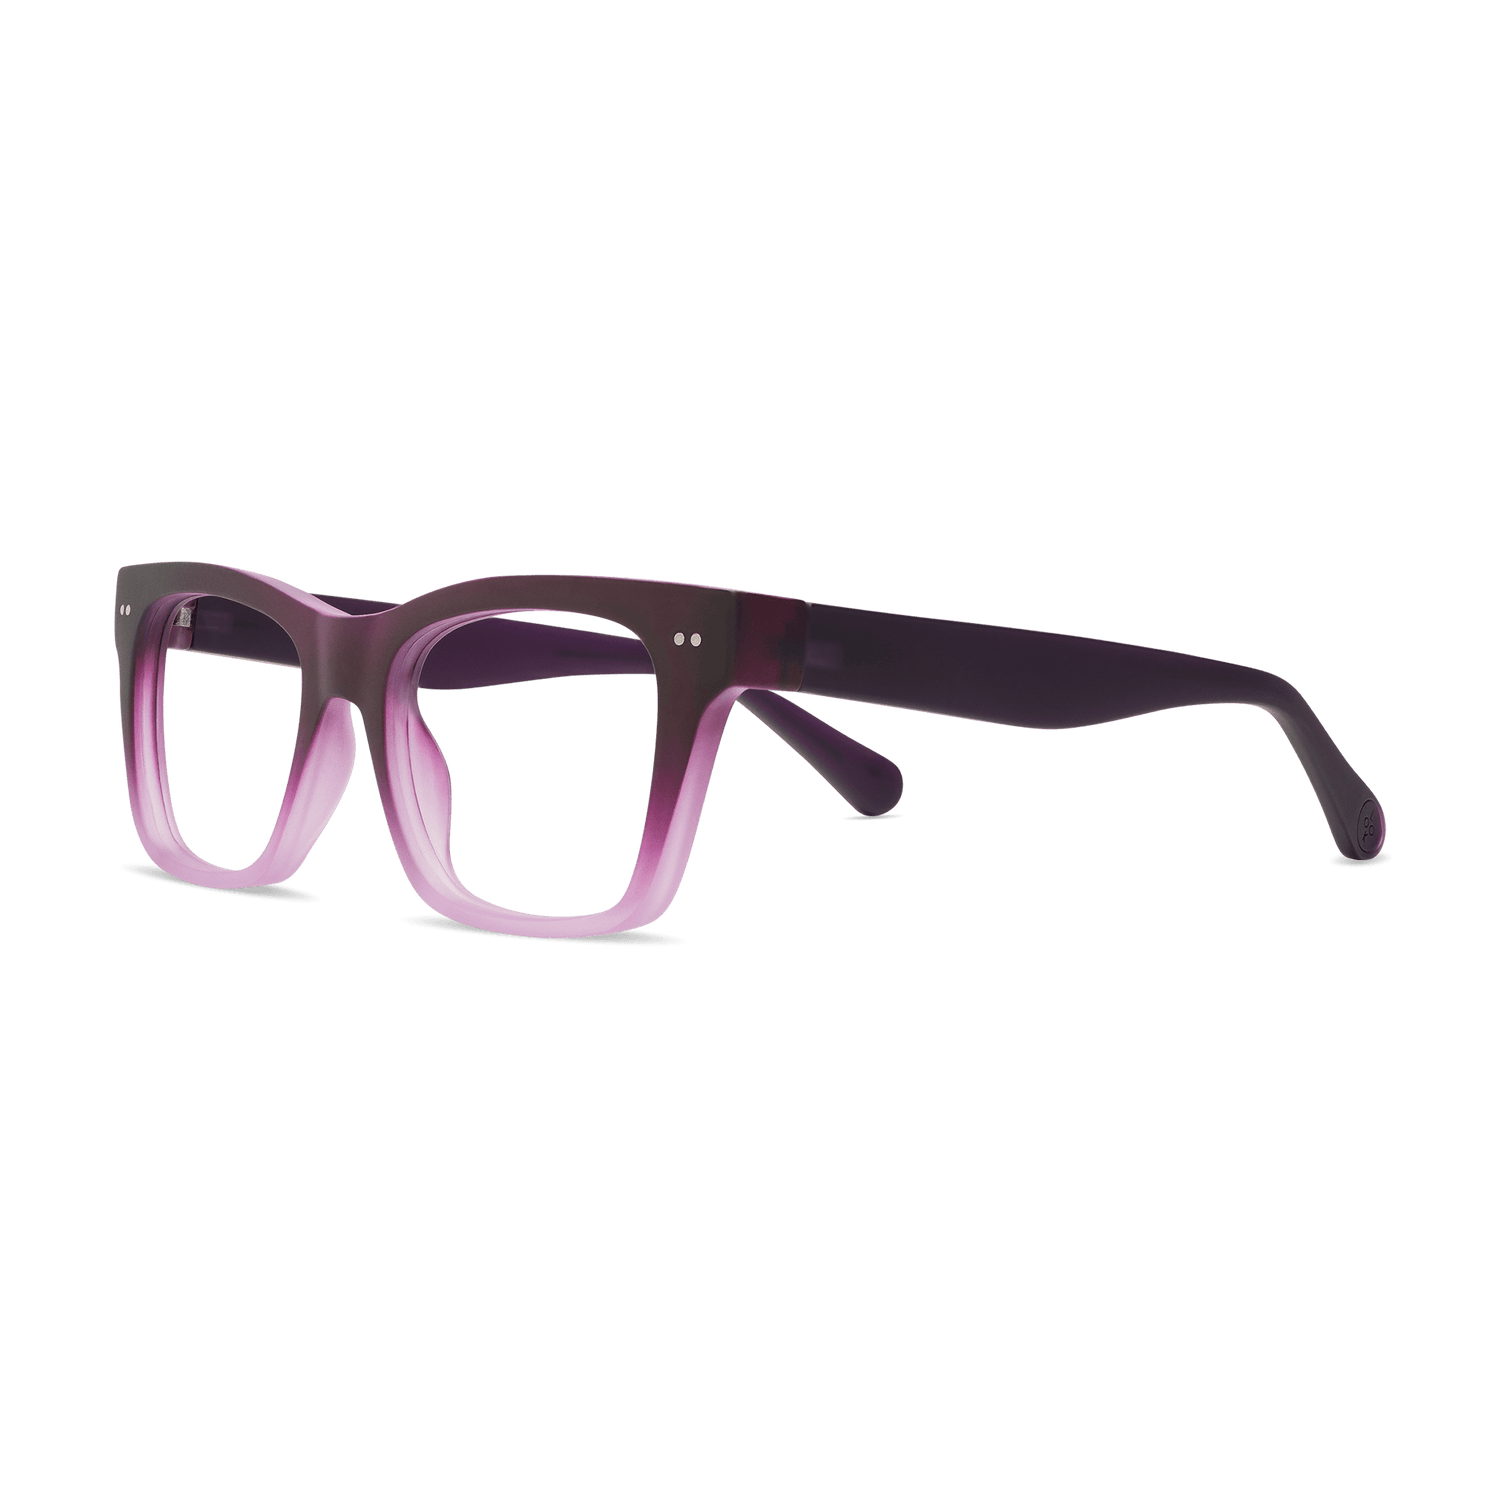 Cosmo Blue Light Eyewear Frames LOOK OPTIC   